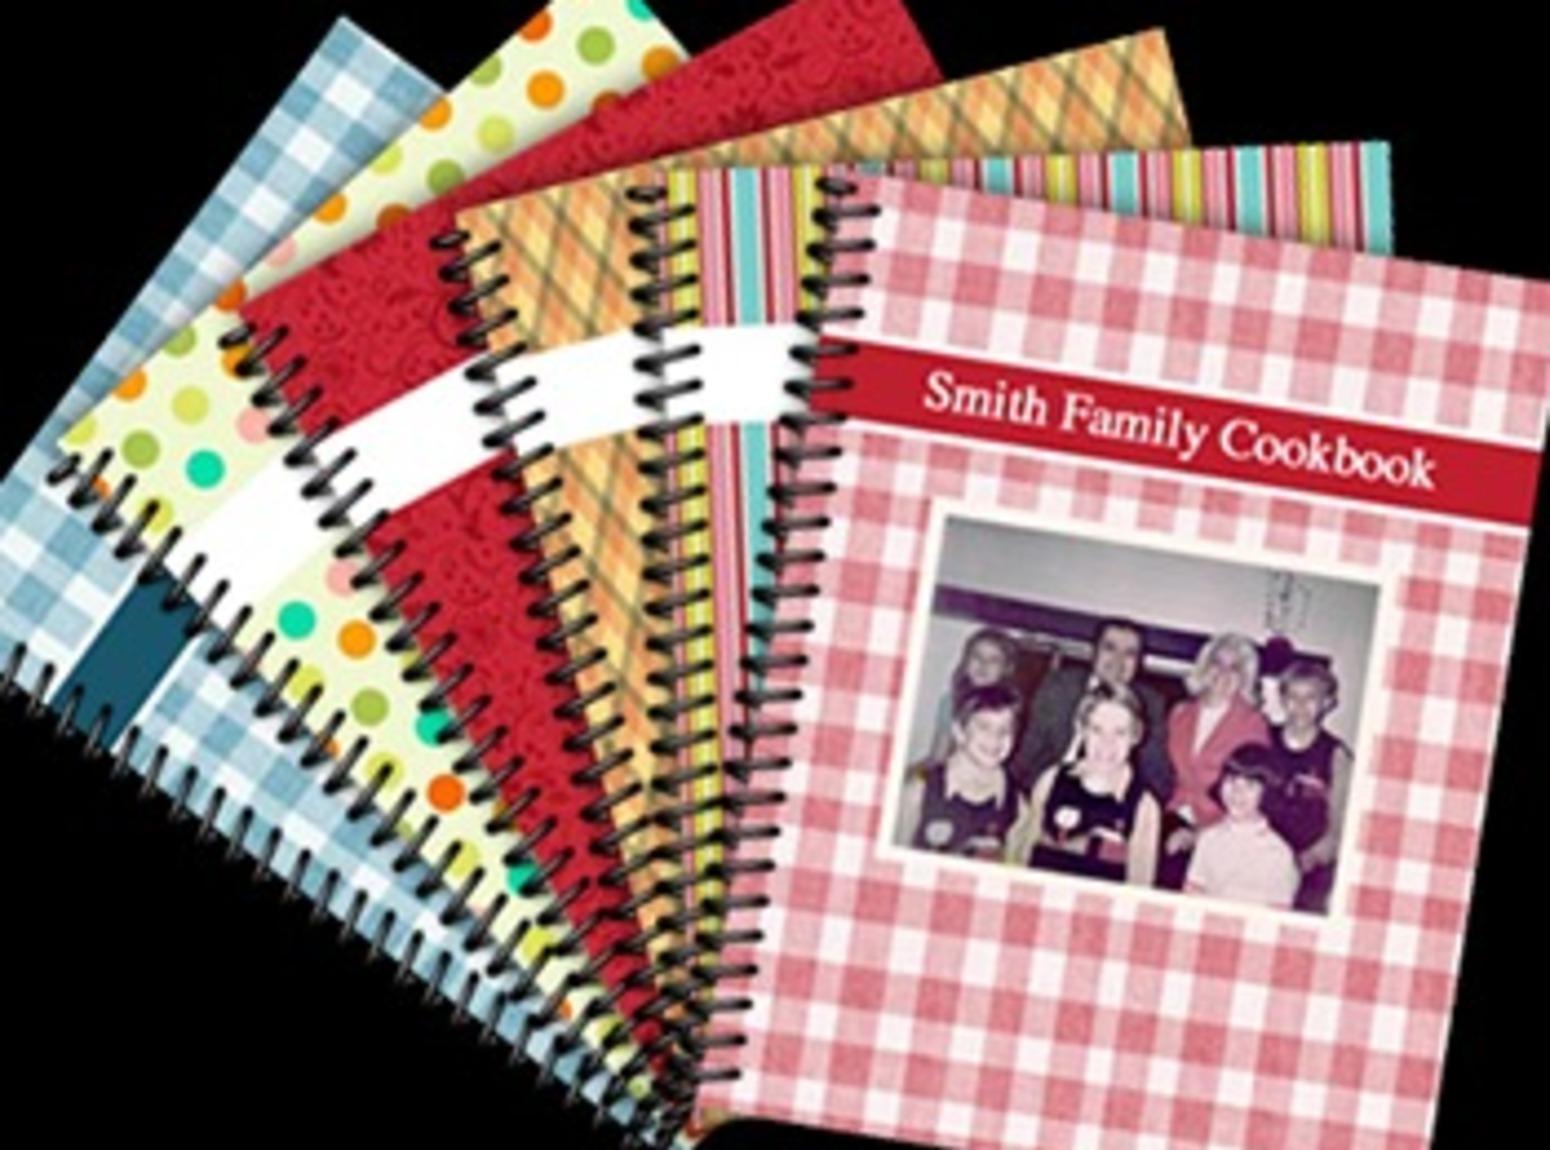 Community cookbooks prepared by members